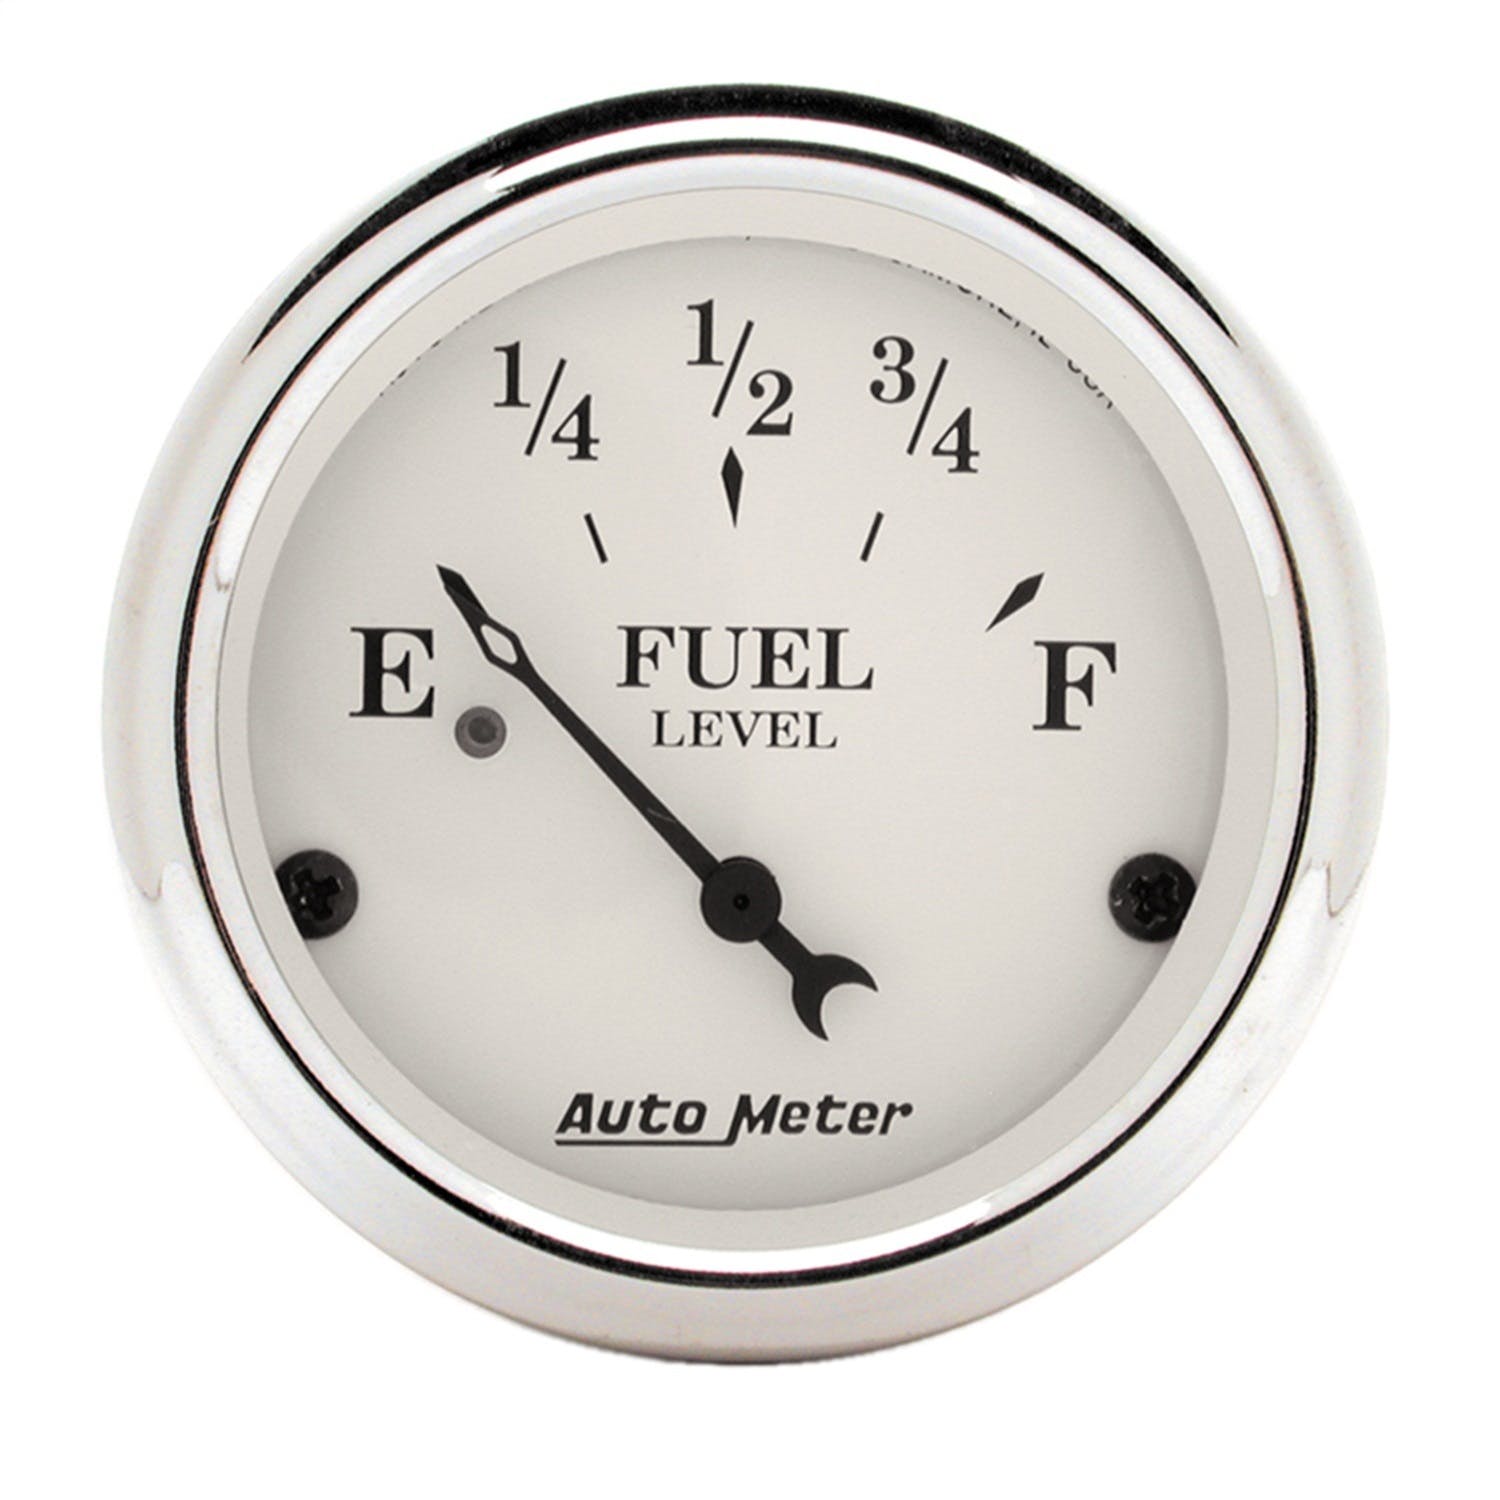 AutoMeter Products 1606 Fuel Level Gauge